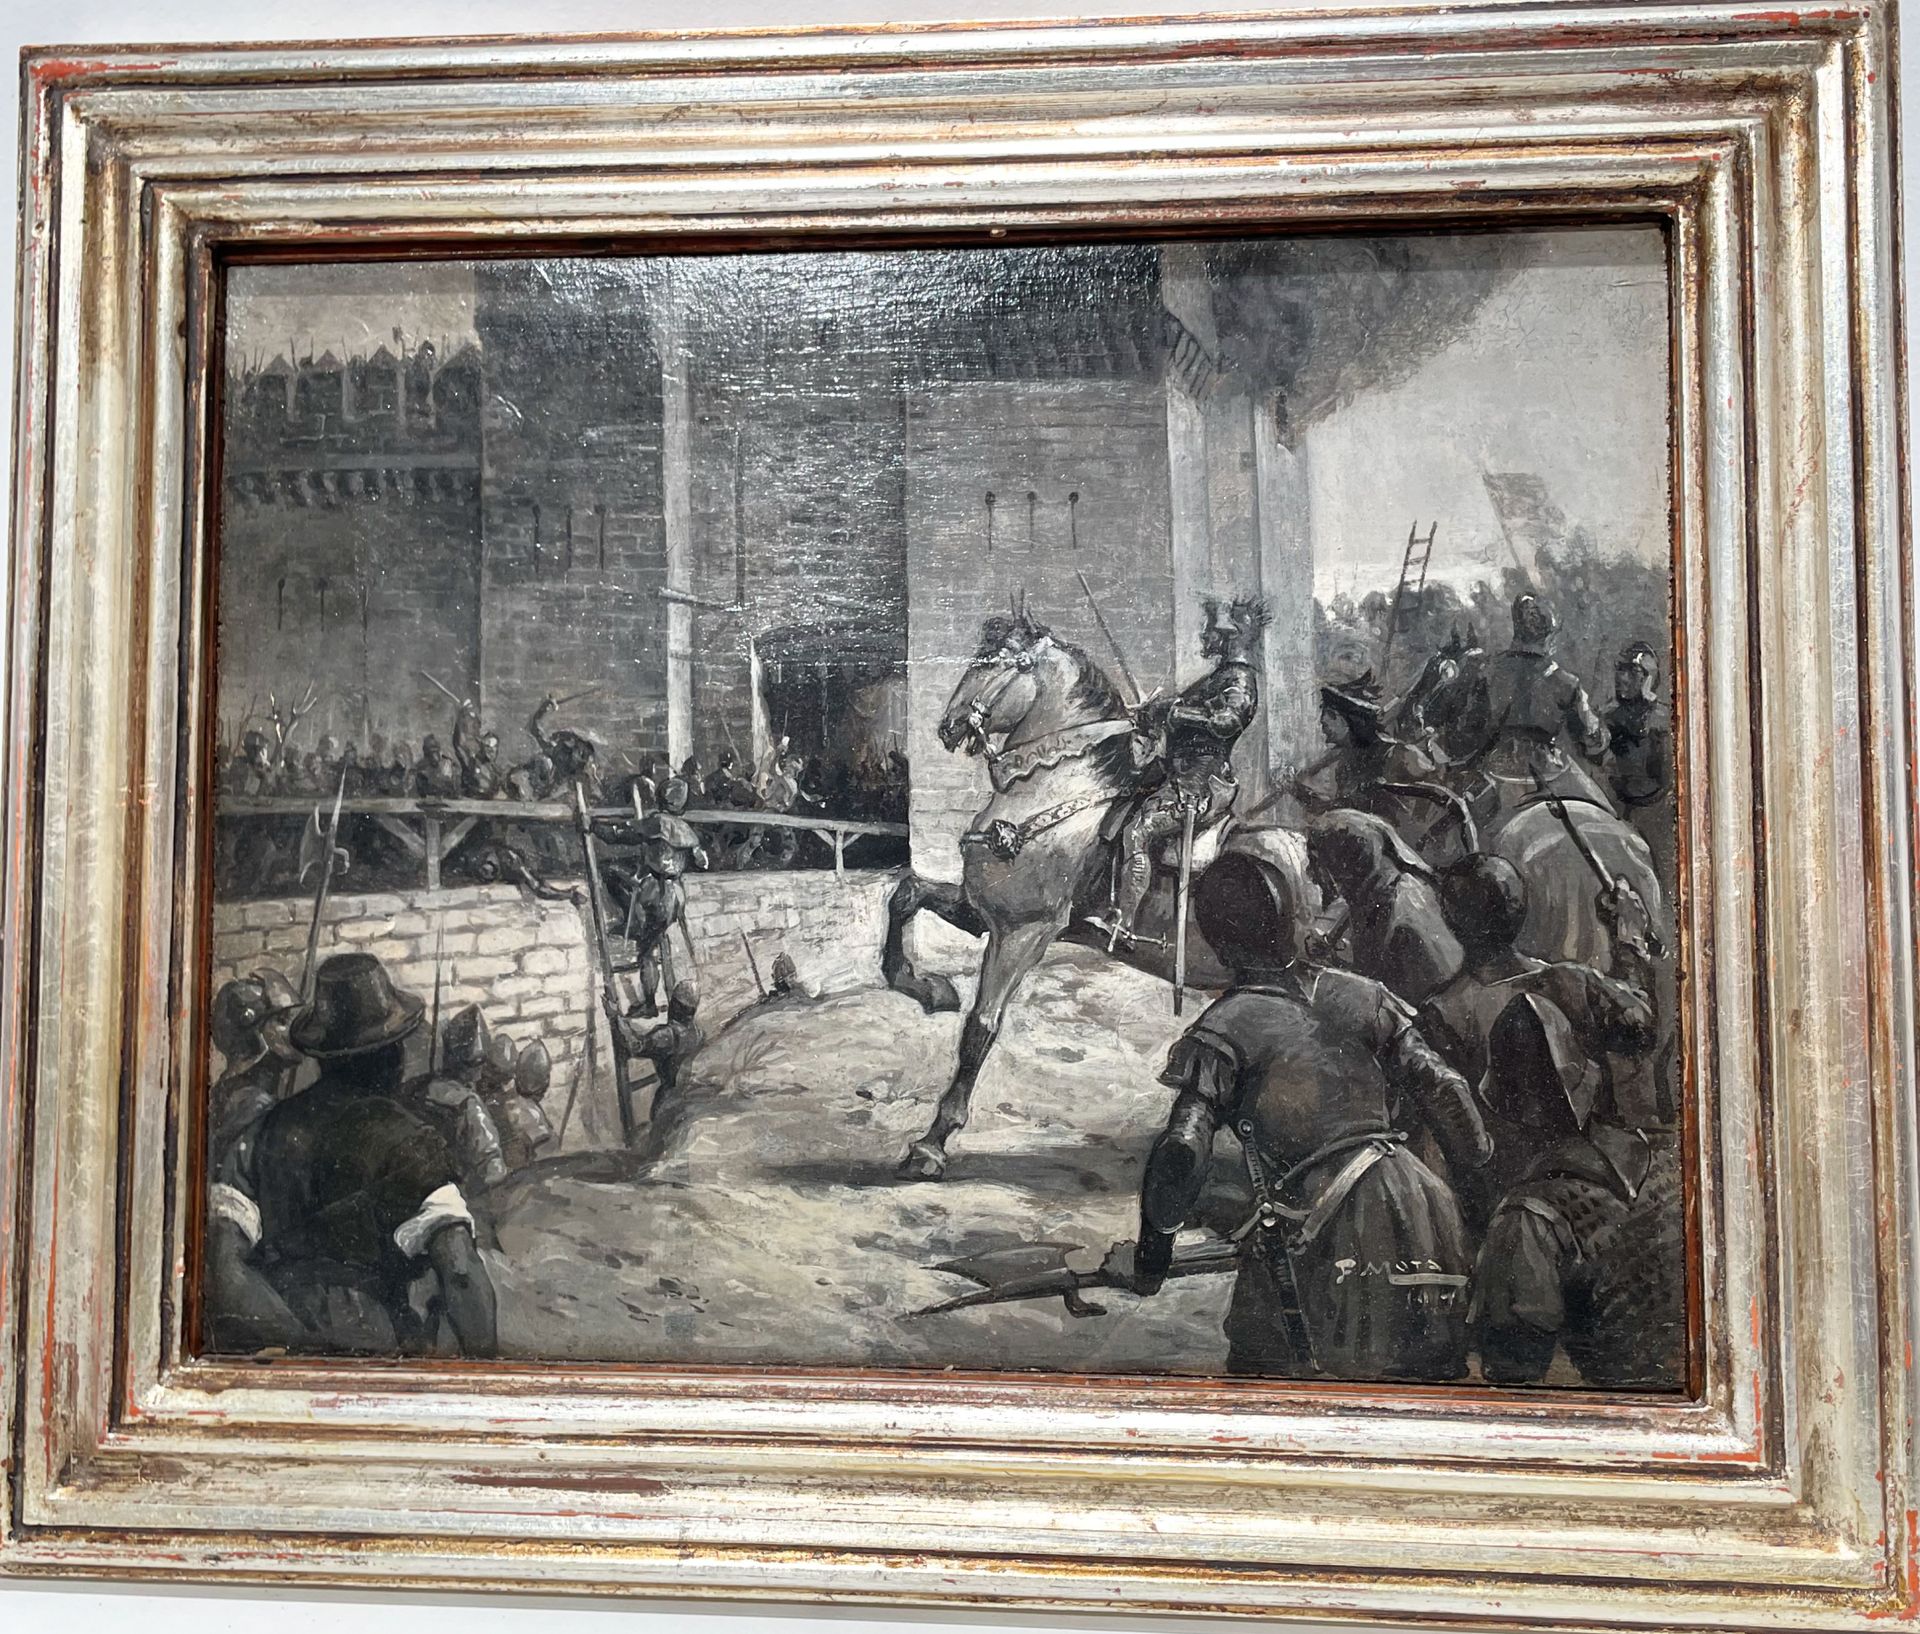 Null 费尔南多-莫塔(XIX-XX)

叛乱

1917

板上油彩

右下方有签名和日期

26,5 x 34,5 cm